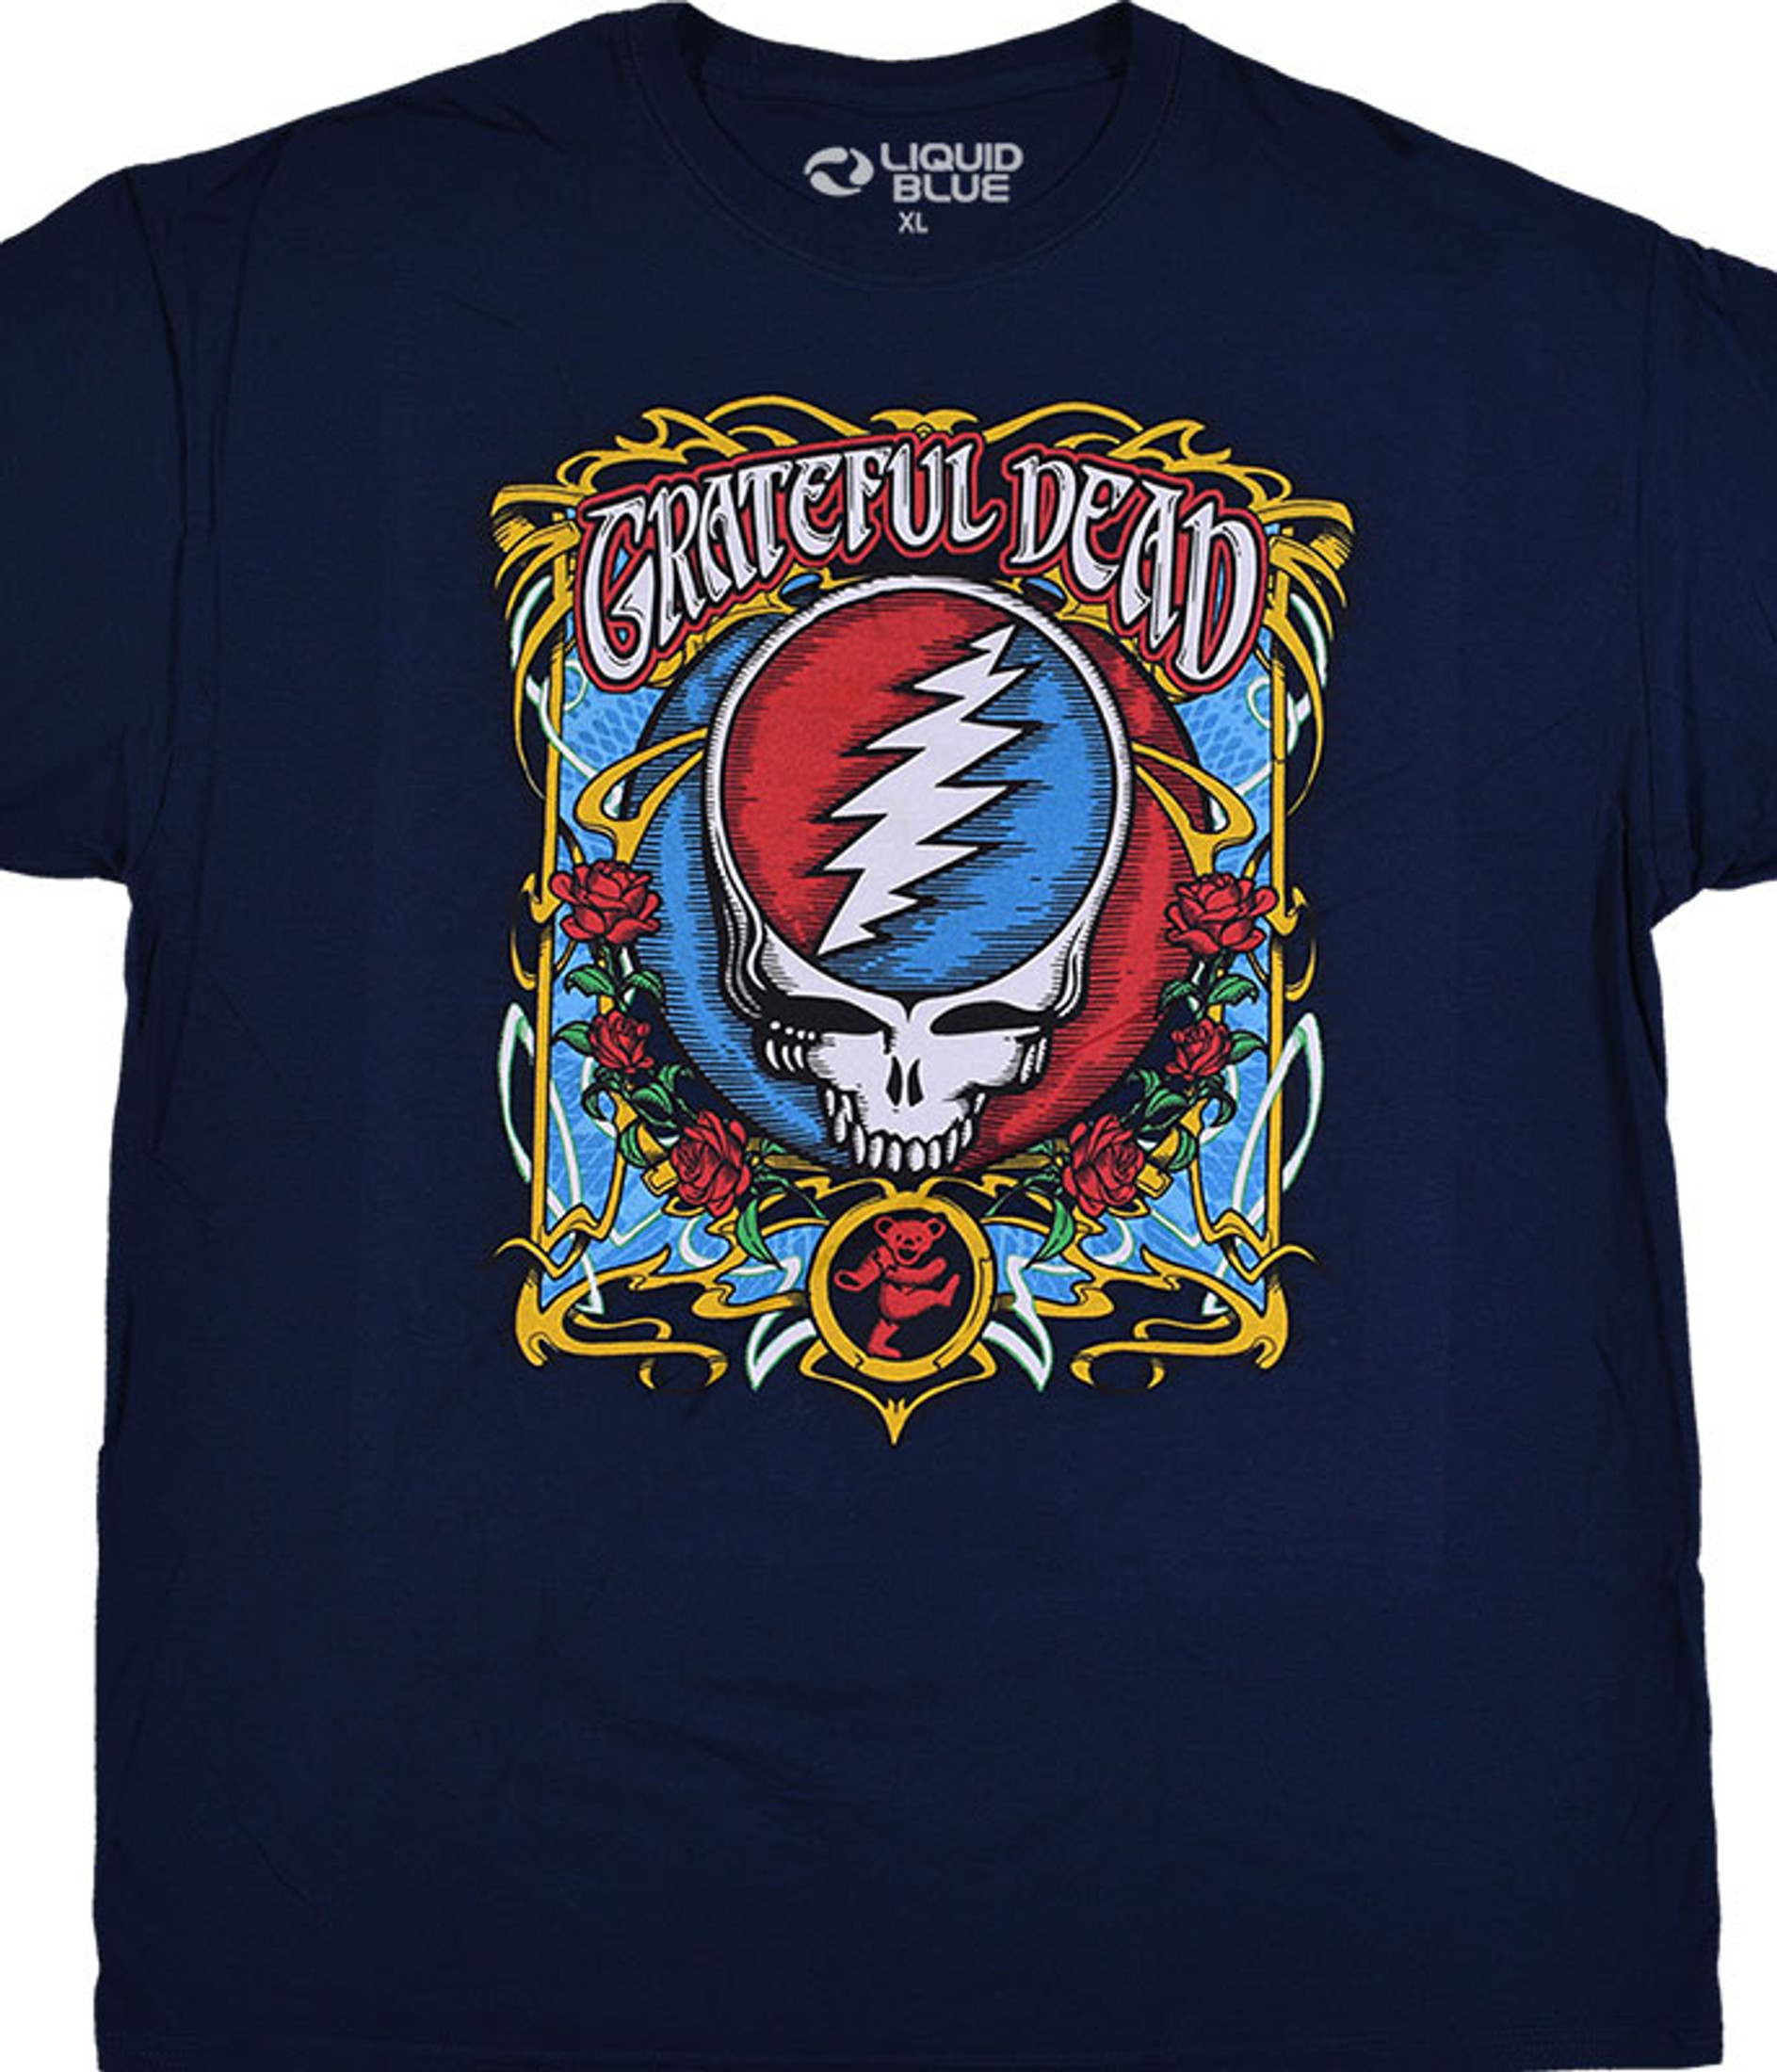 Grateful Dead - Steal Your Roses T-Shirt Blue